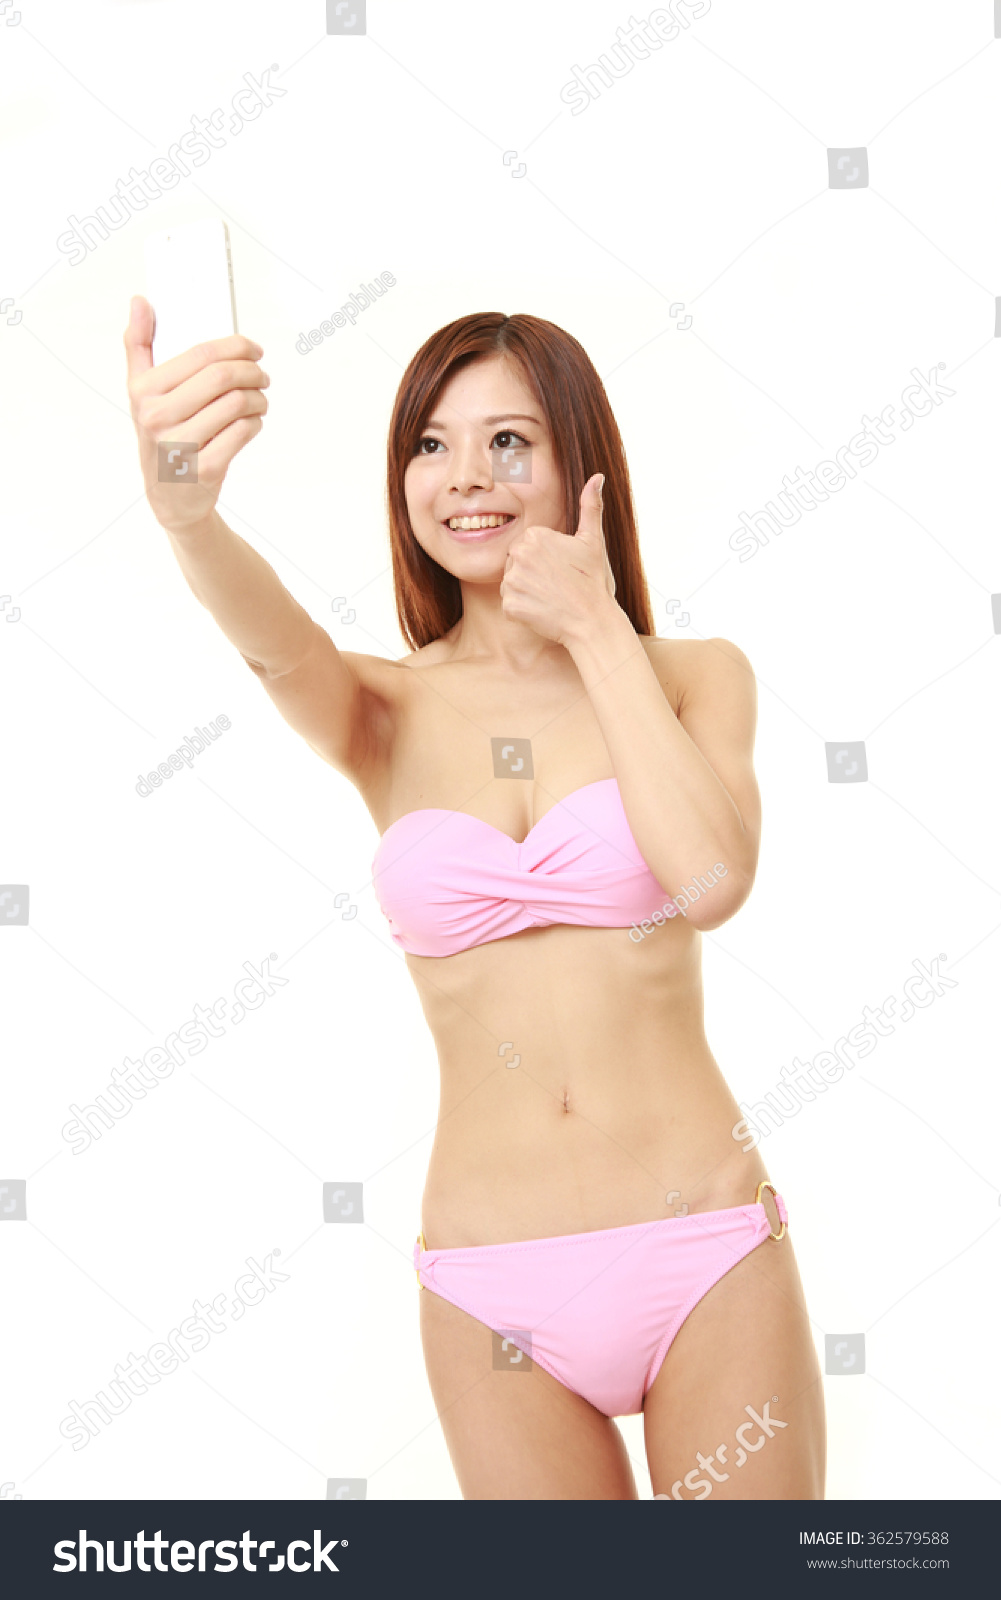 naked women boobs selfie pics